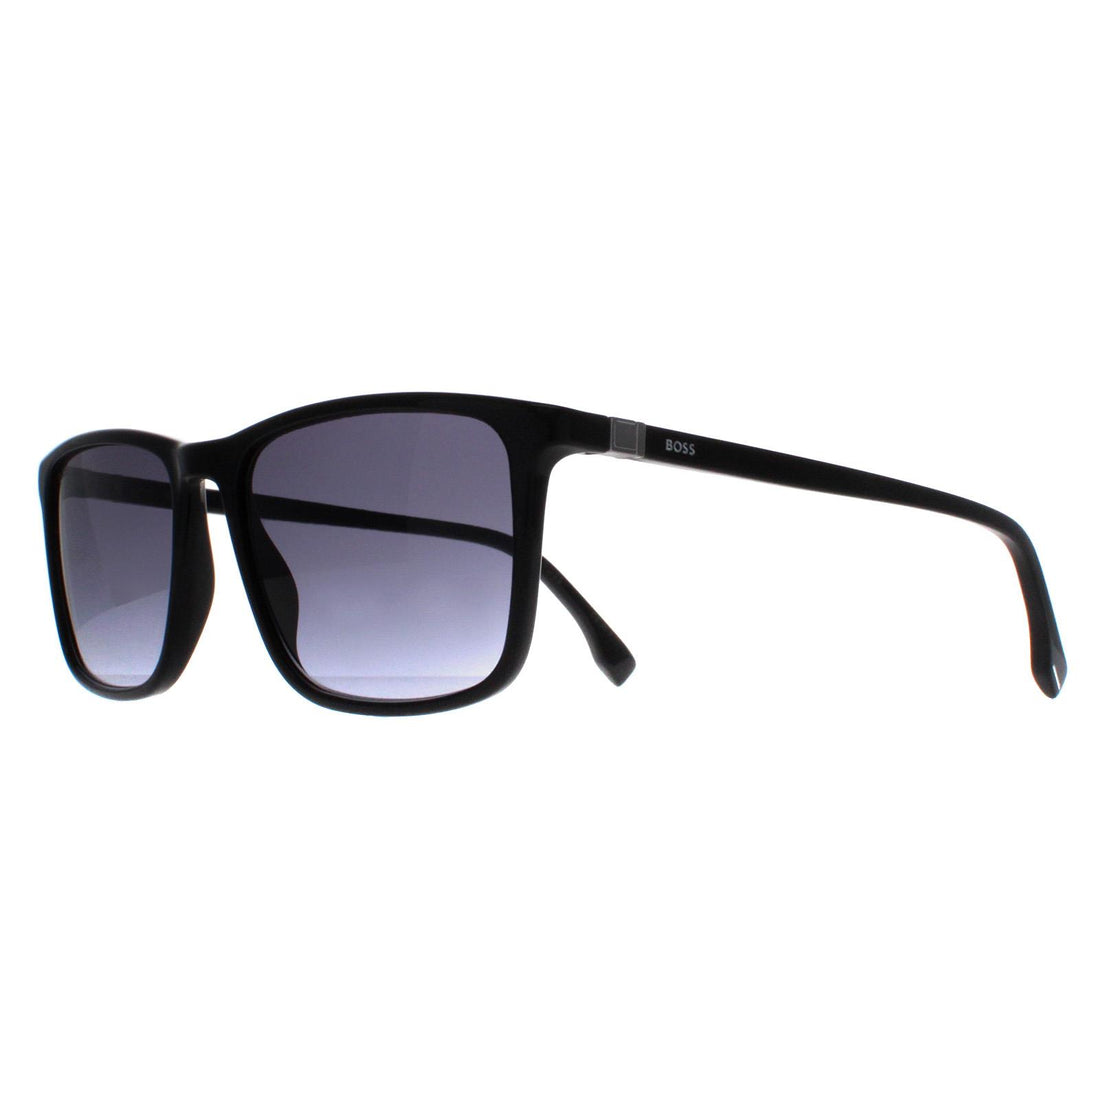 Hugo Boss Sunglasses BOSS 1434/S 807 9O Black Dark Grey Gradient